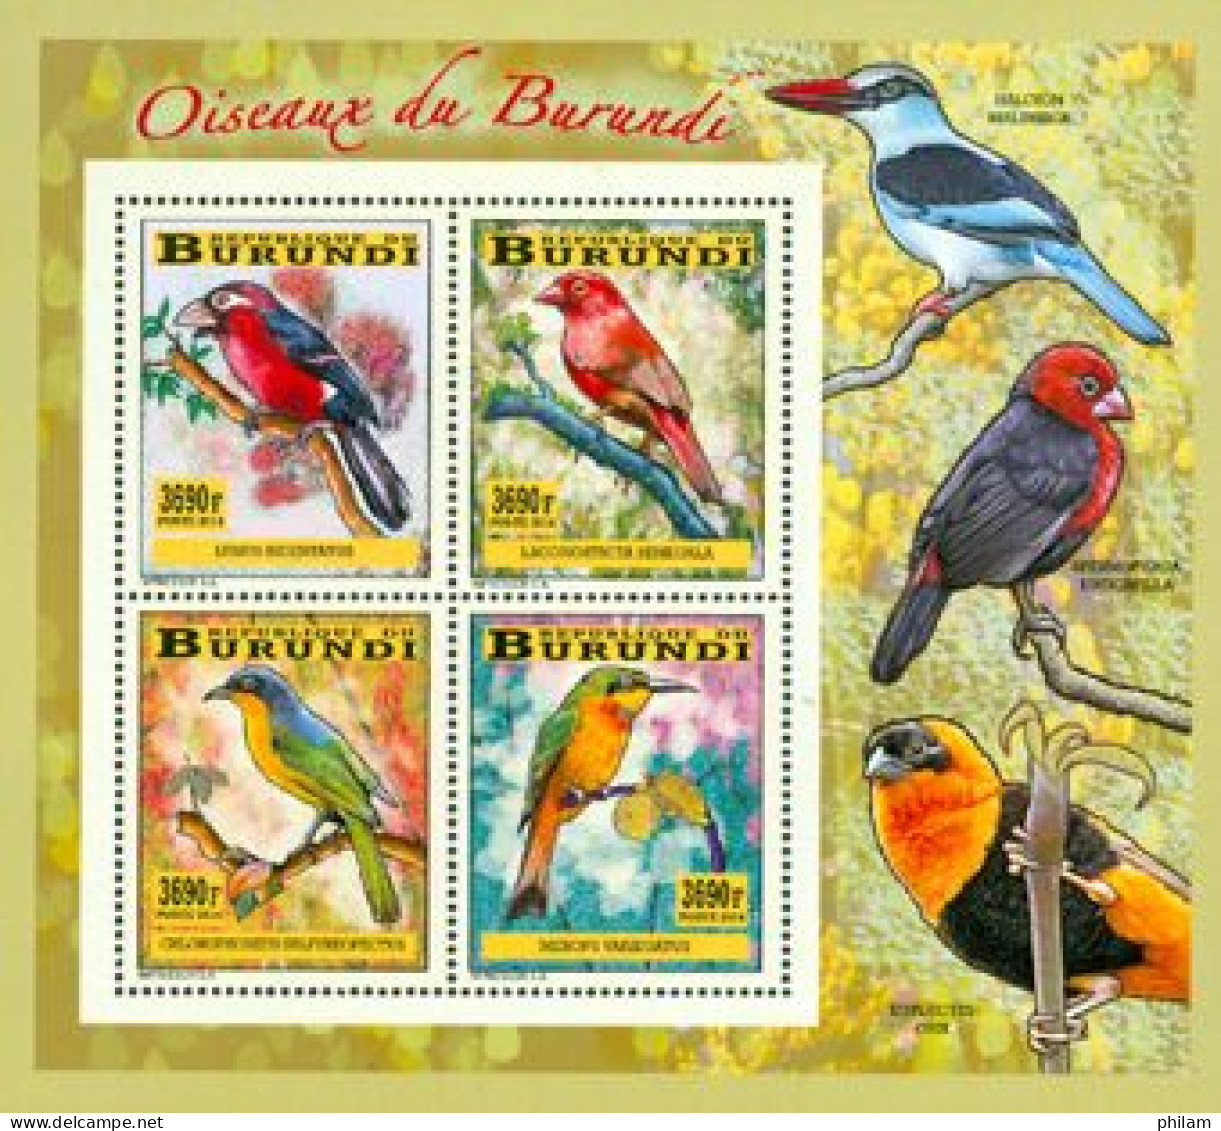 Burundi 2014 - Les Oiseaux Du Burundi - Oiseaux Chanteurs - Bloc Collectif - Songbirds & Tree Dwellers